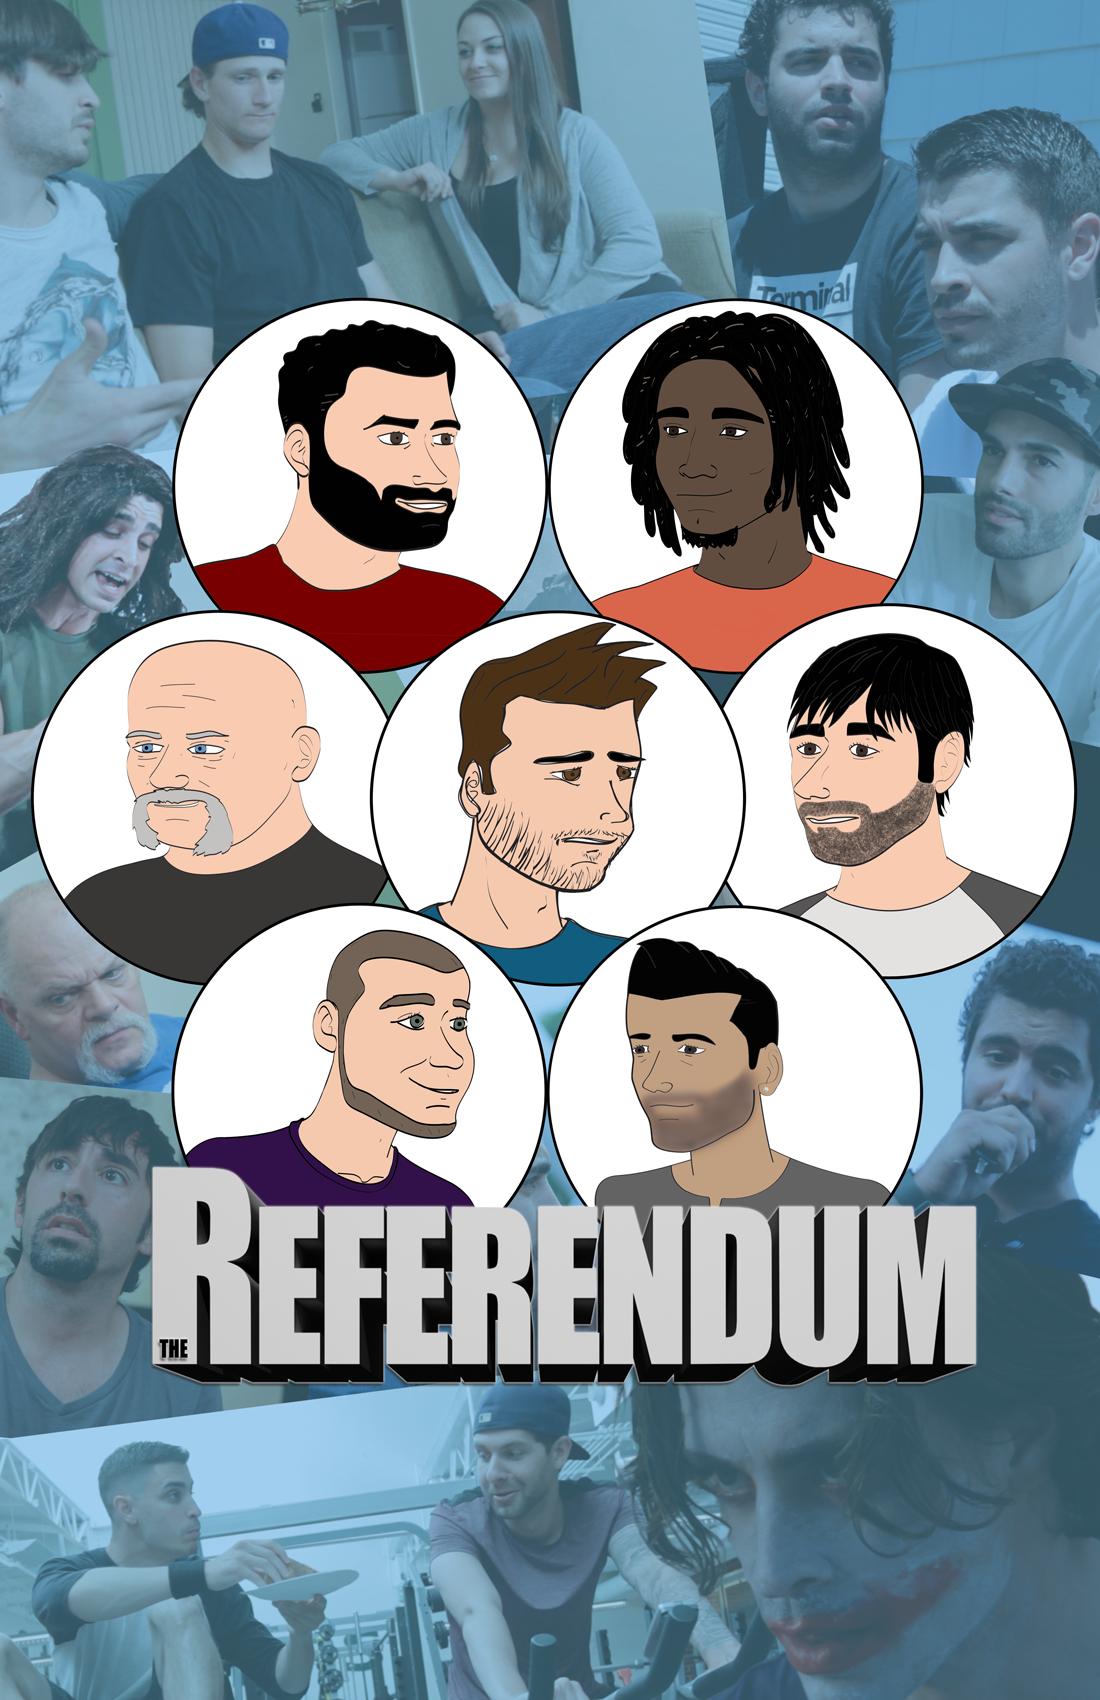 The Referendum